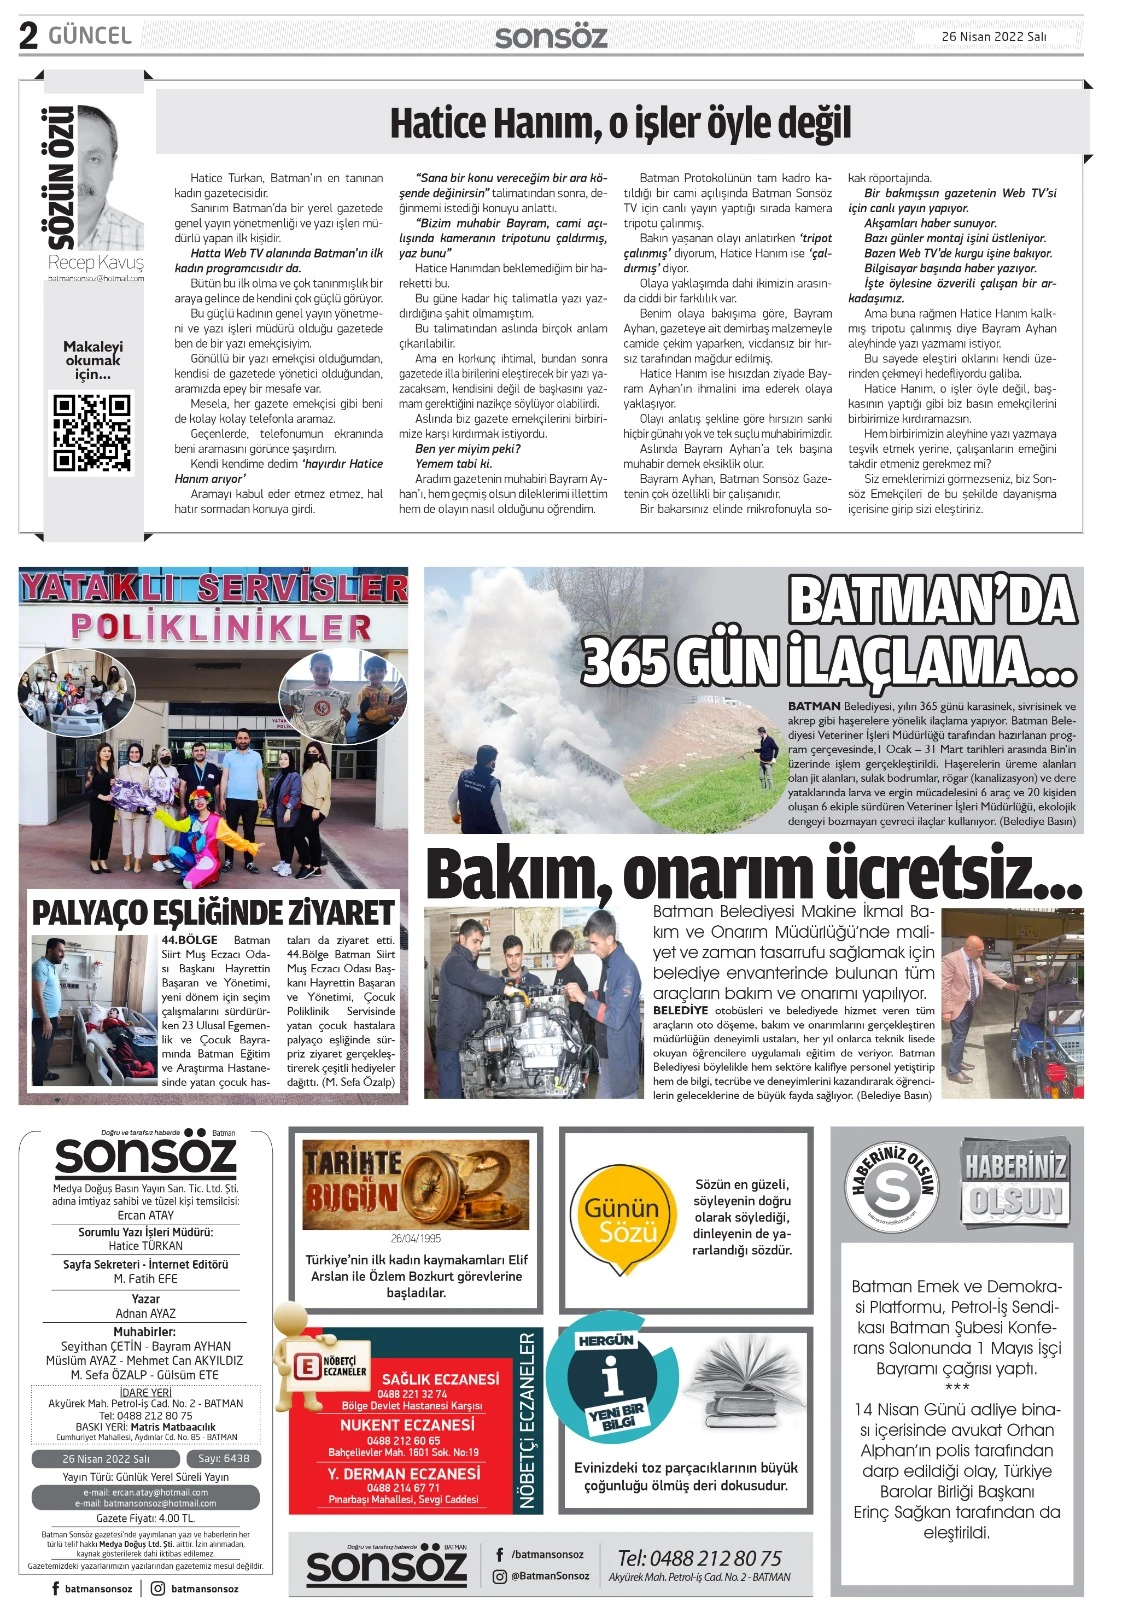 26 Nisan 2022 E-gazete